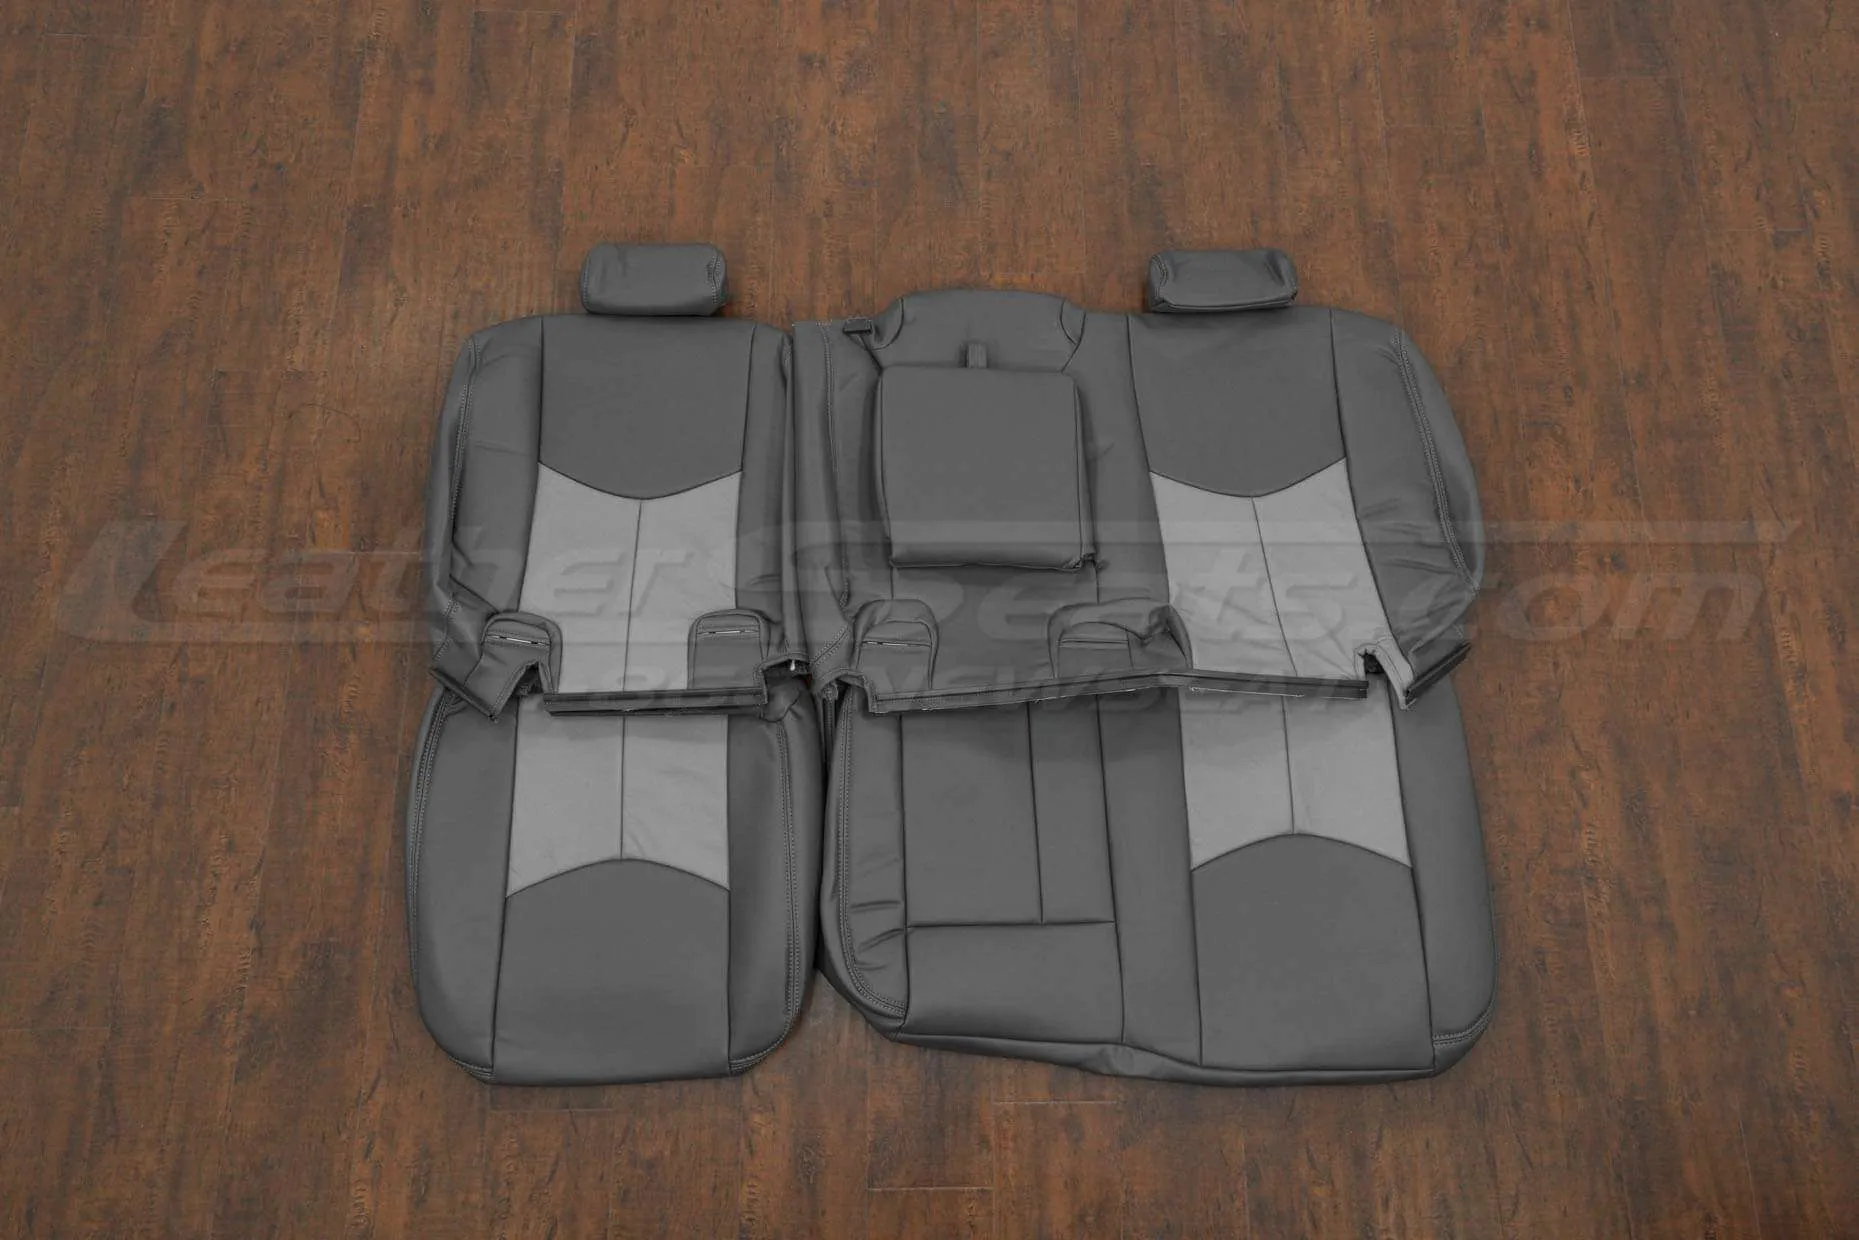 GMC Sierra Crew Cab Leather Seat Kit - Graphite & Smoke - Rear seat upholstery w/ armrest